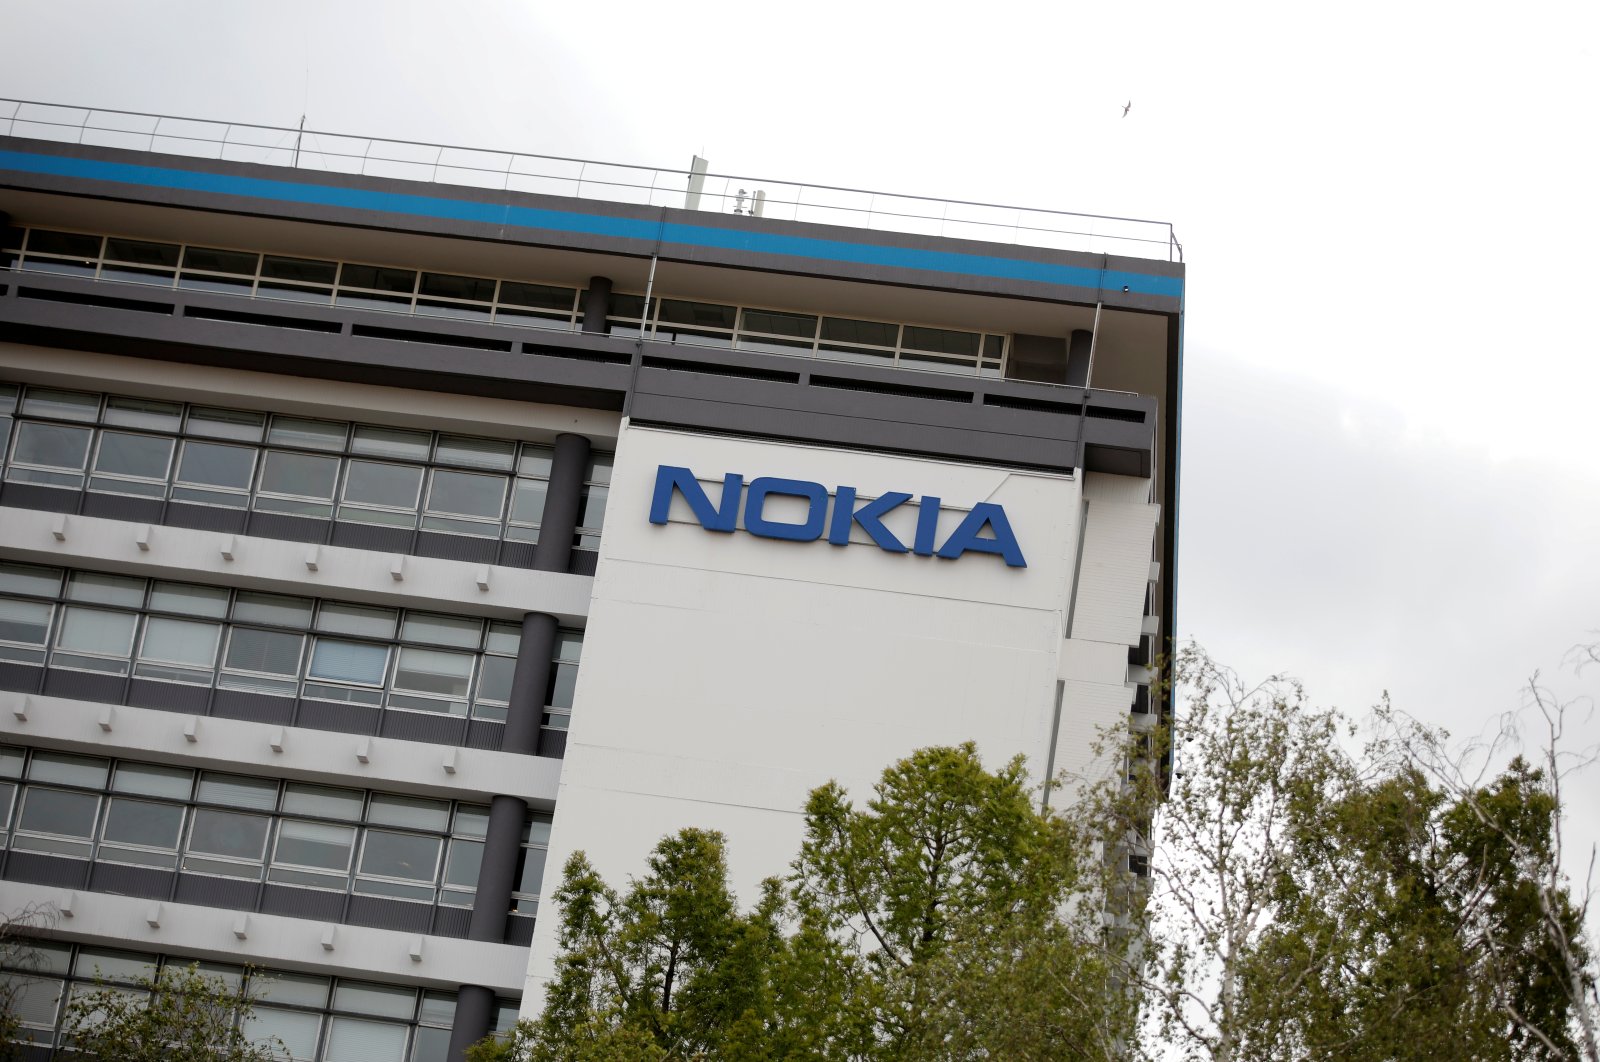 The Nokia logo is displayed at the Nokia Paris-Saclay campus in Nozay, near Paris, France, June 30, 2020. (Reuters Photo)